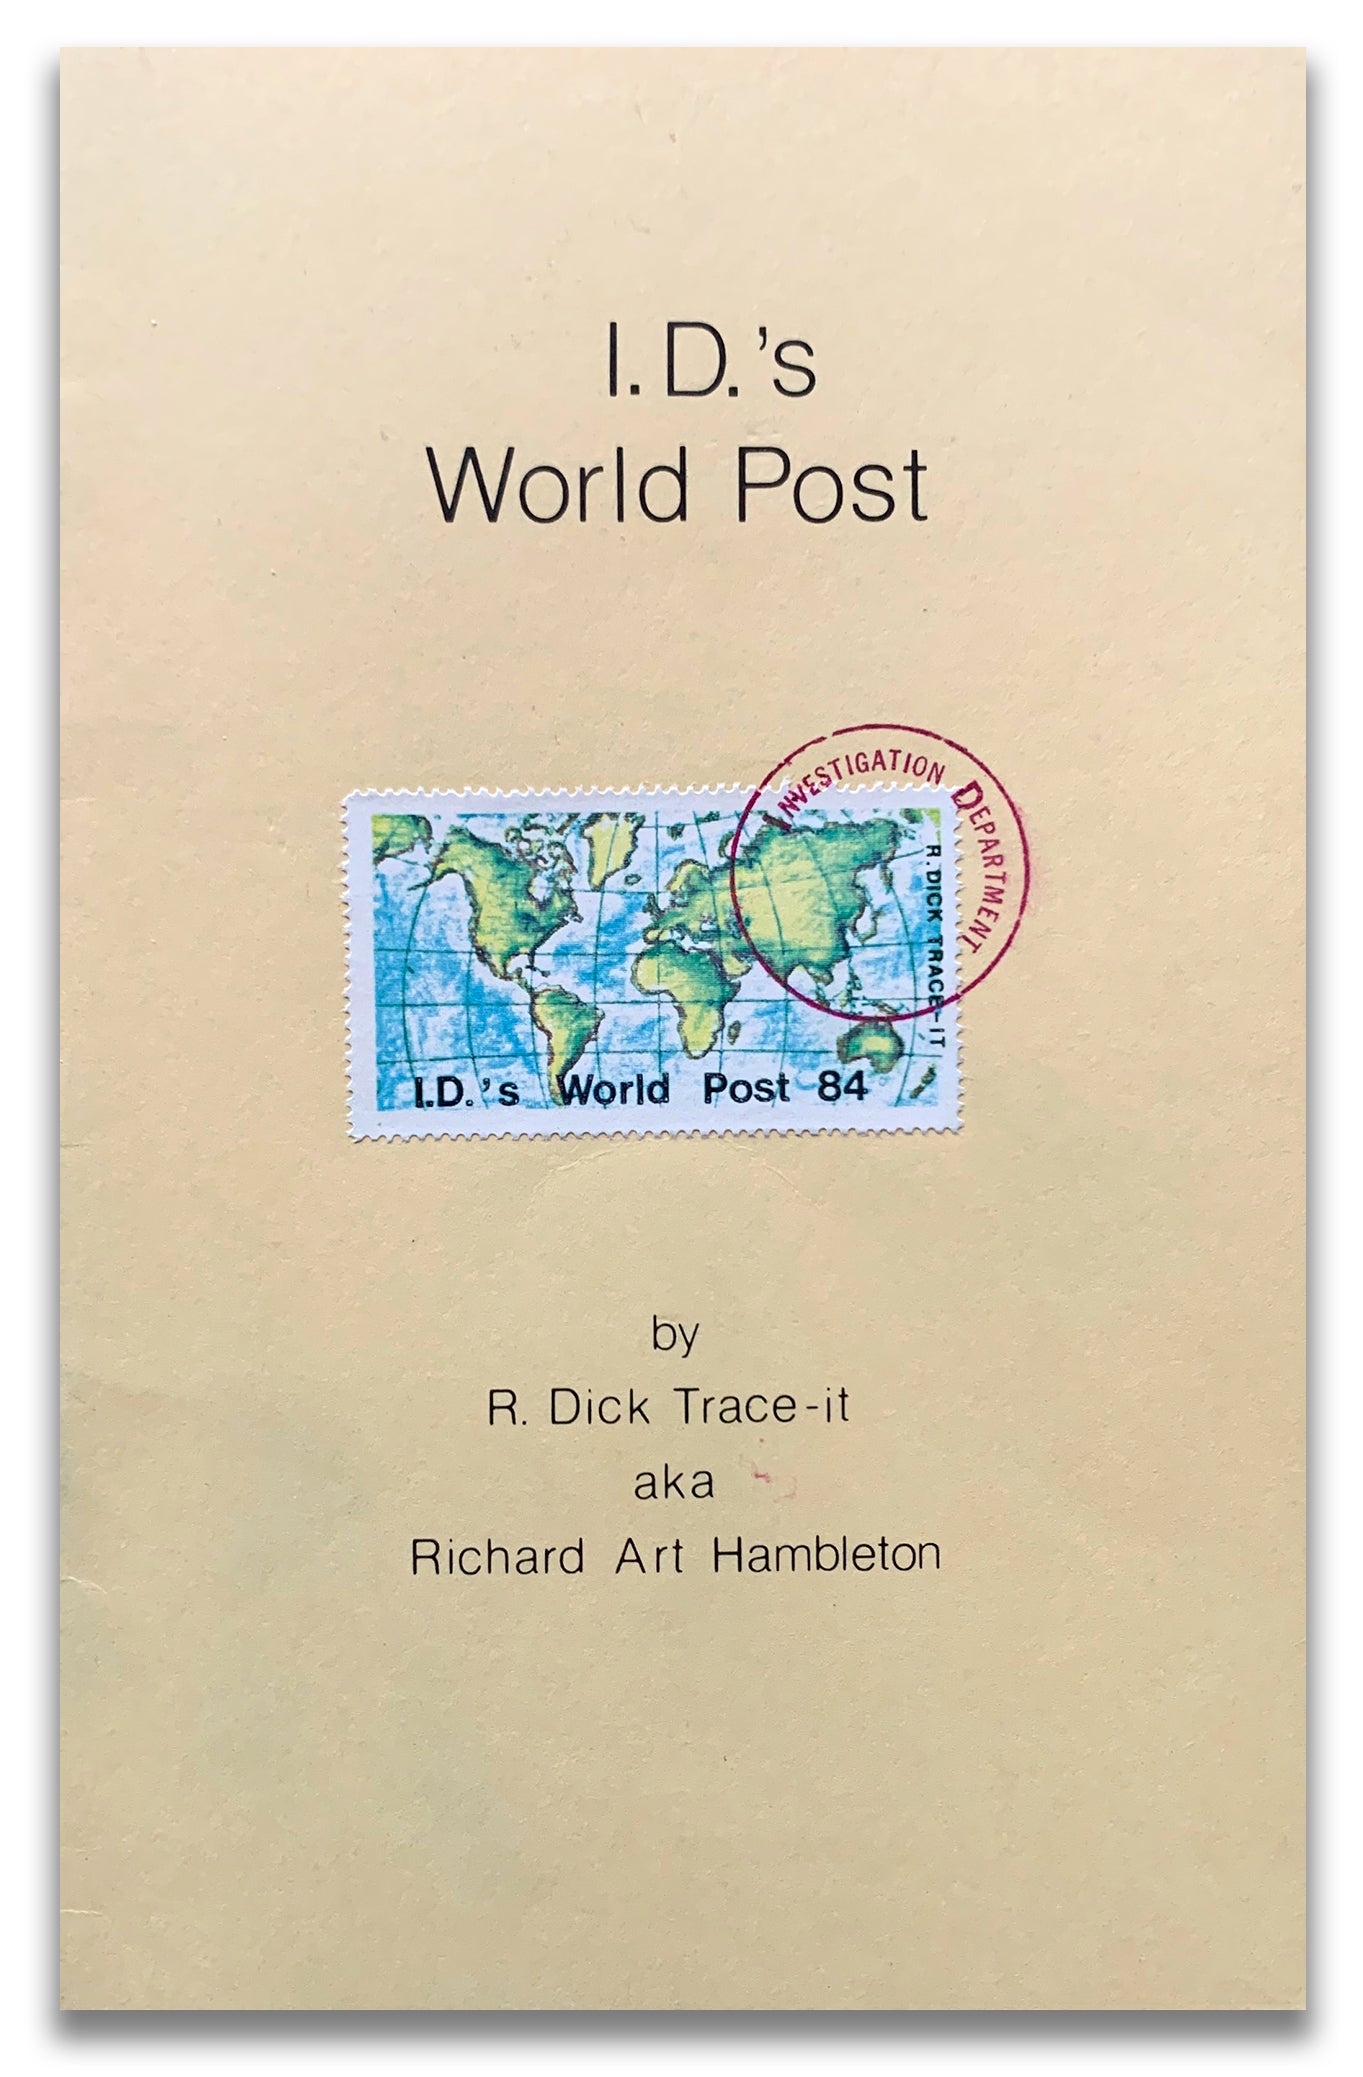 Richard Hambleton -  "I.D.'s World Post" Booklet